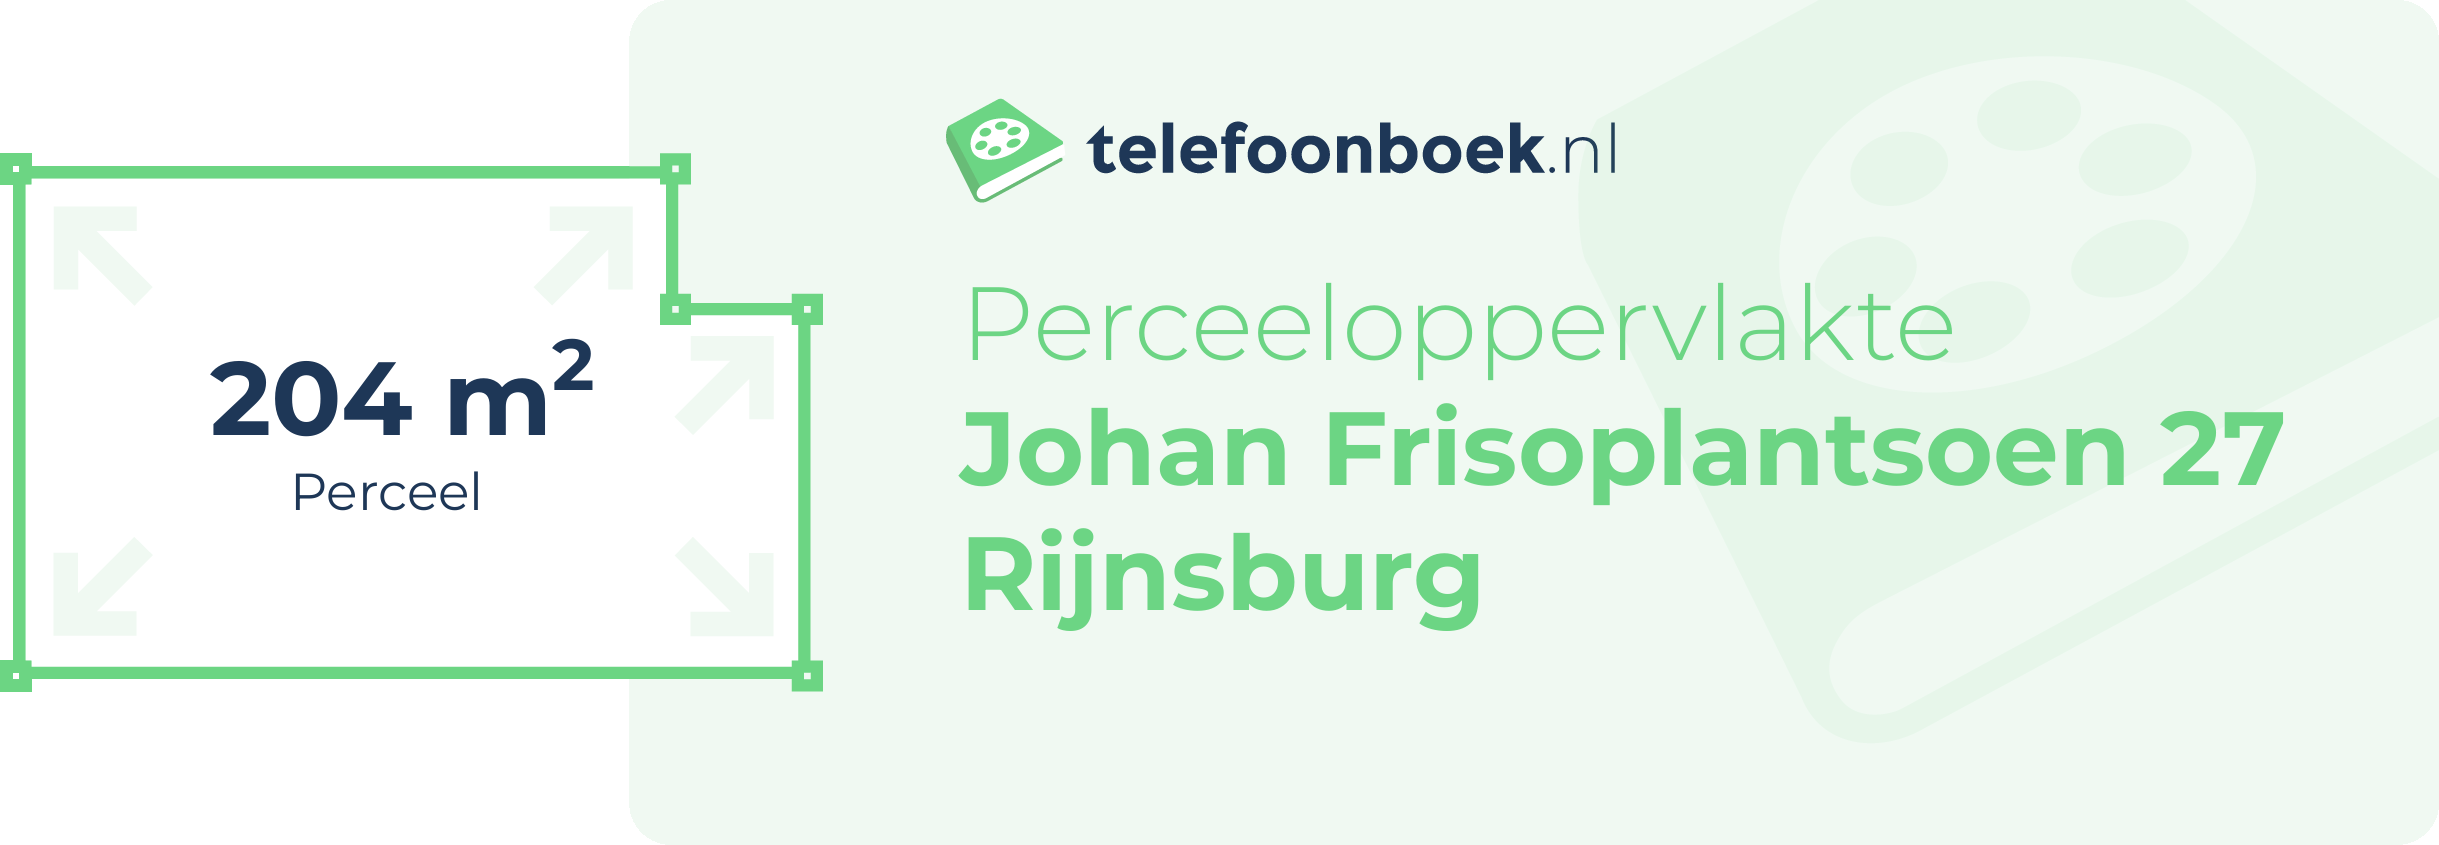 Perceeloppervlakte Johan Frisoplantsoen 27 Rijnsburg